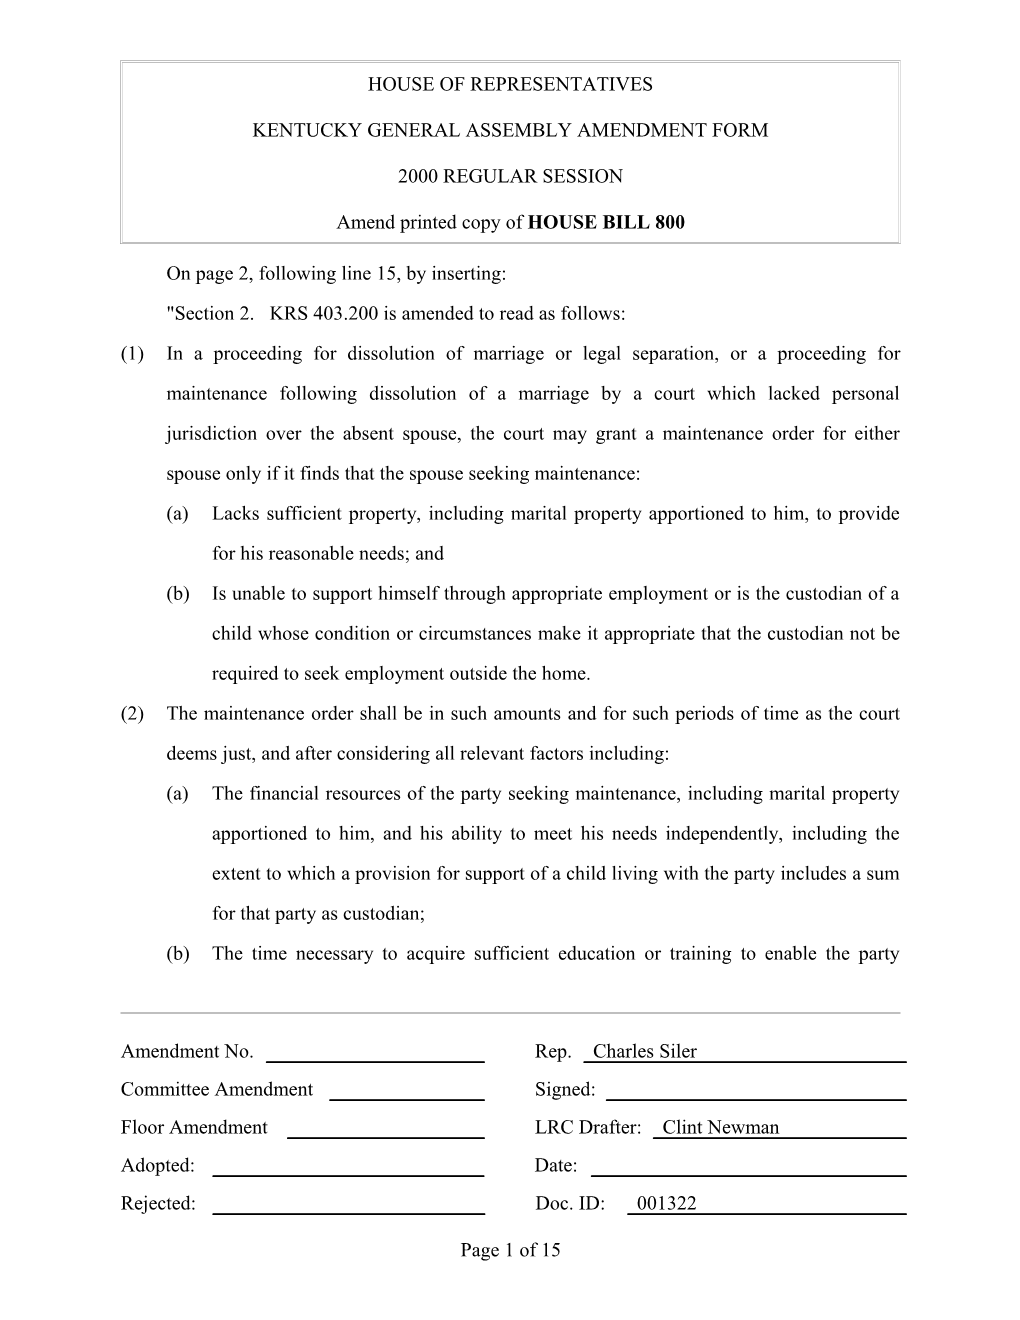 Kentucky General Assembly Amendment Form s8